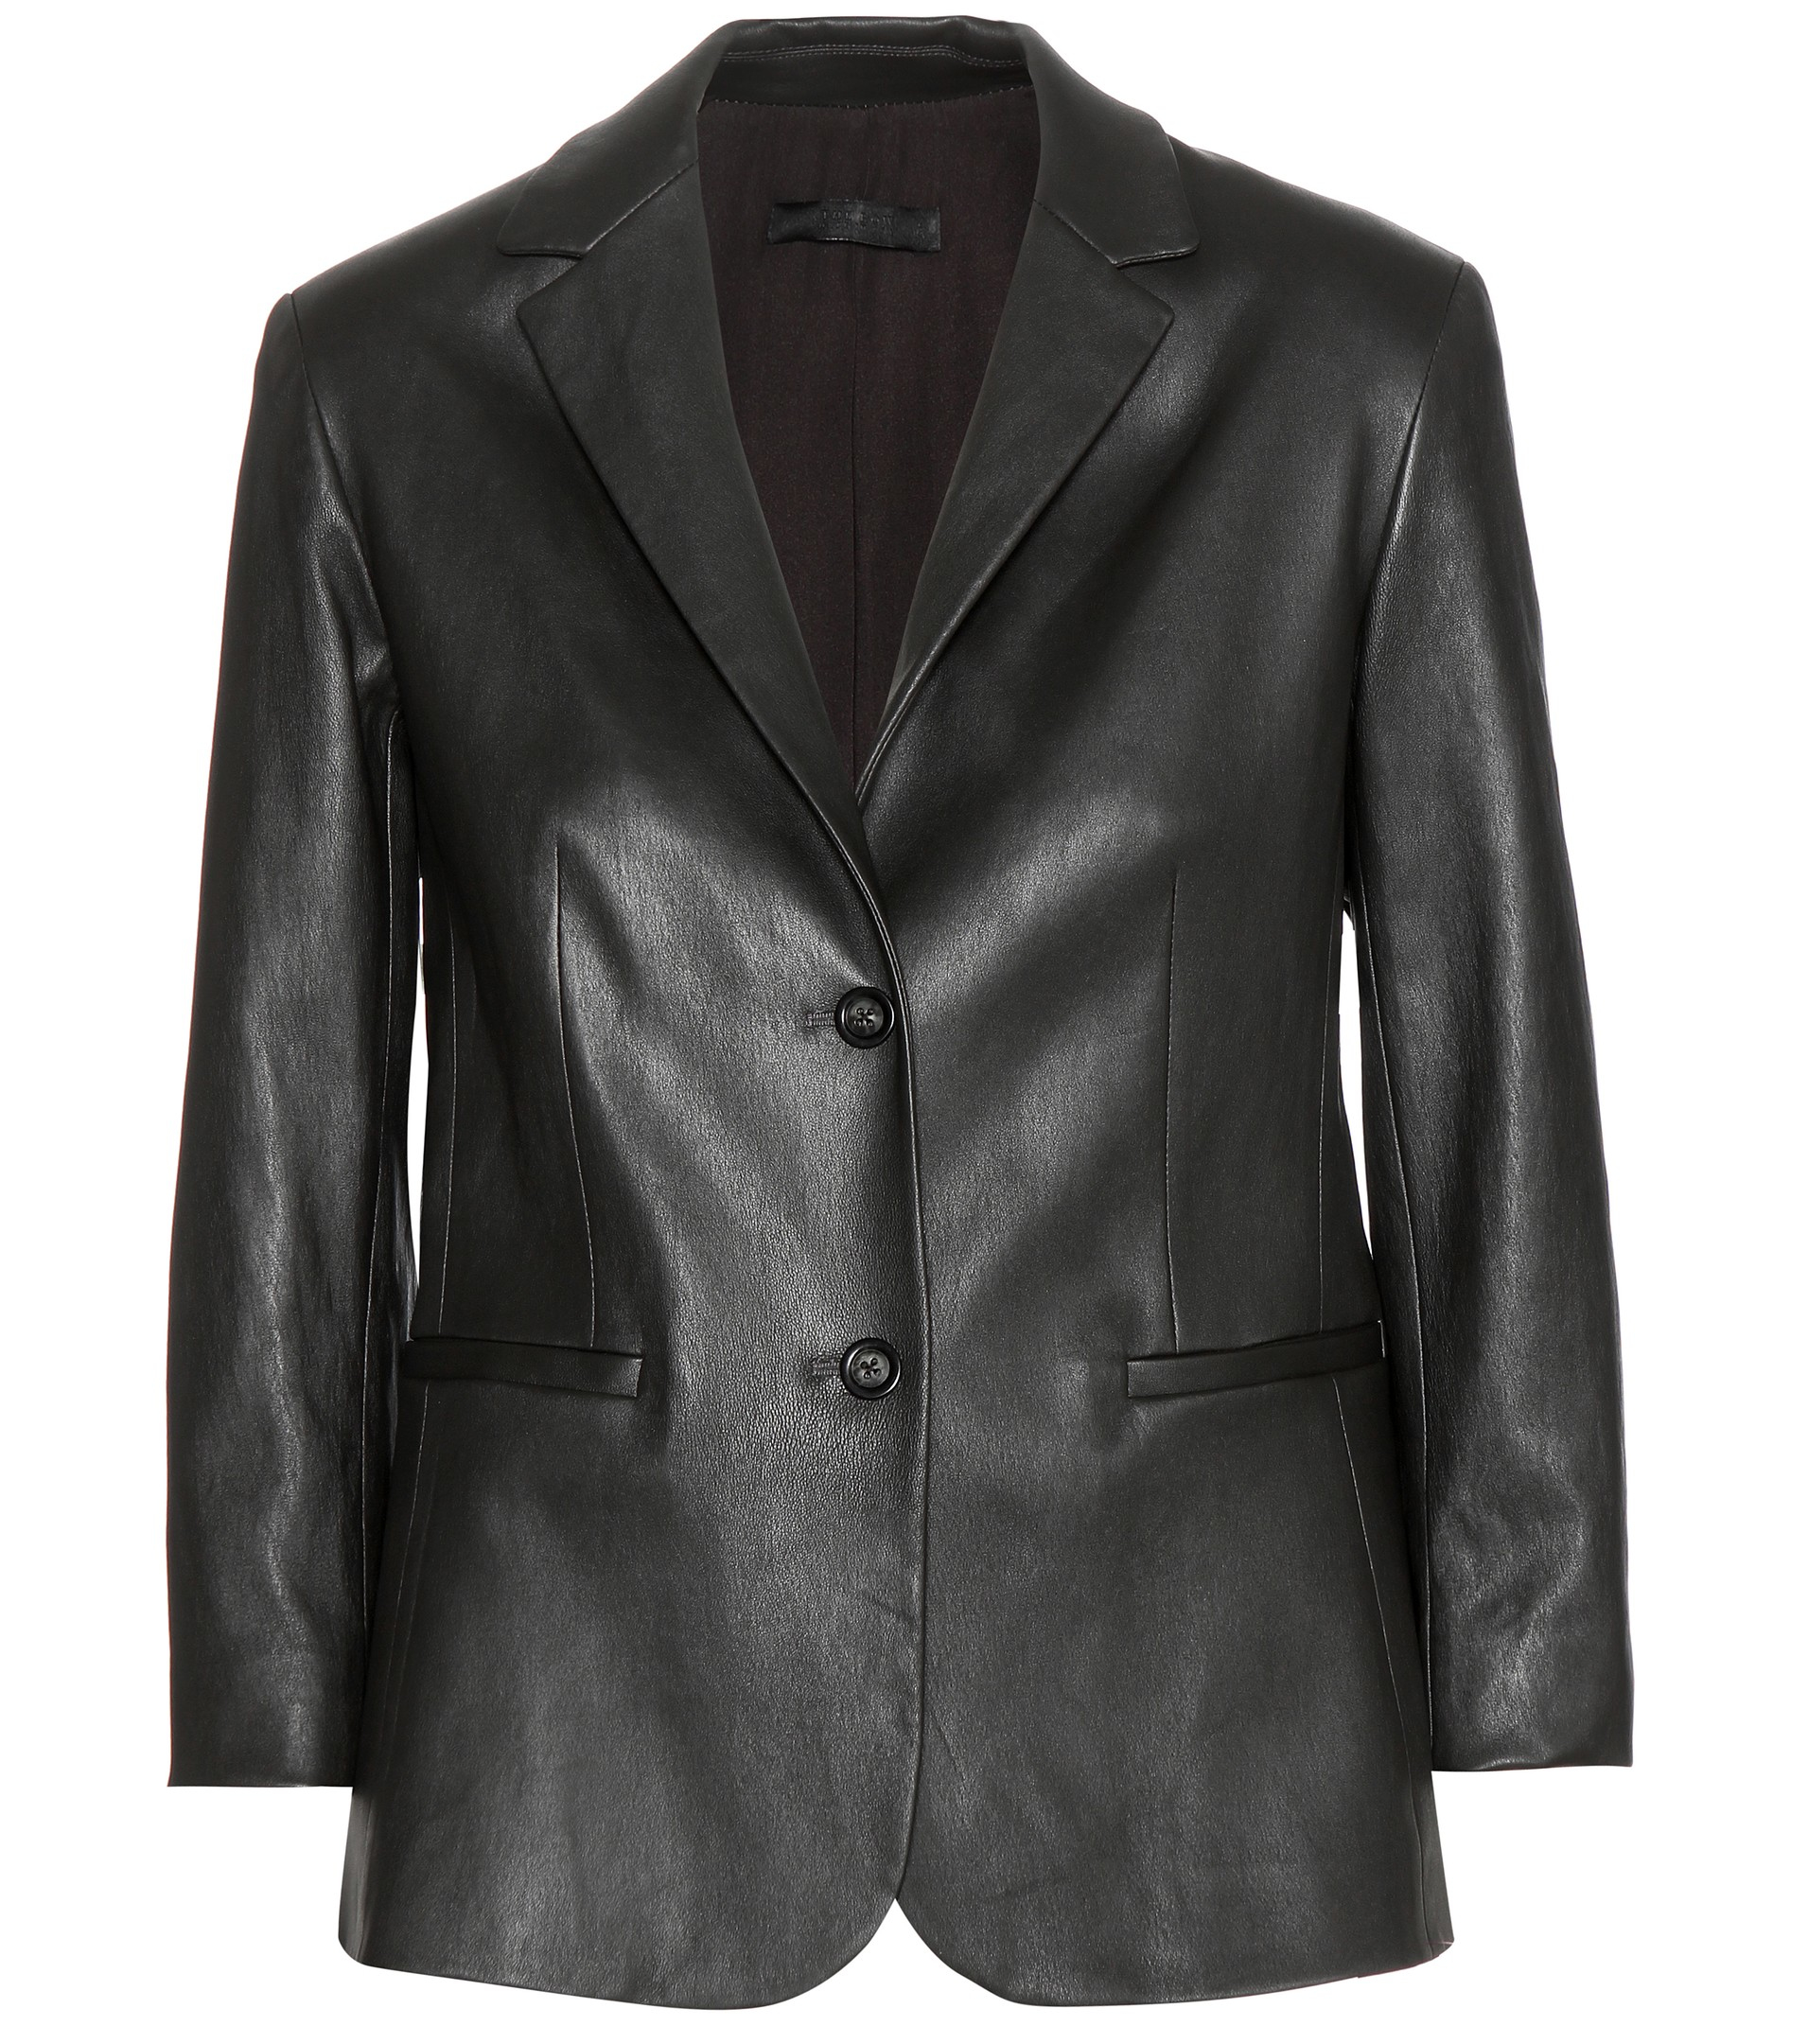 Lyst - The Row Nolbon Leather Blazer in Black